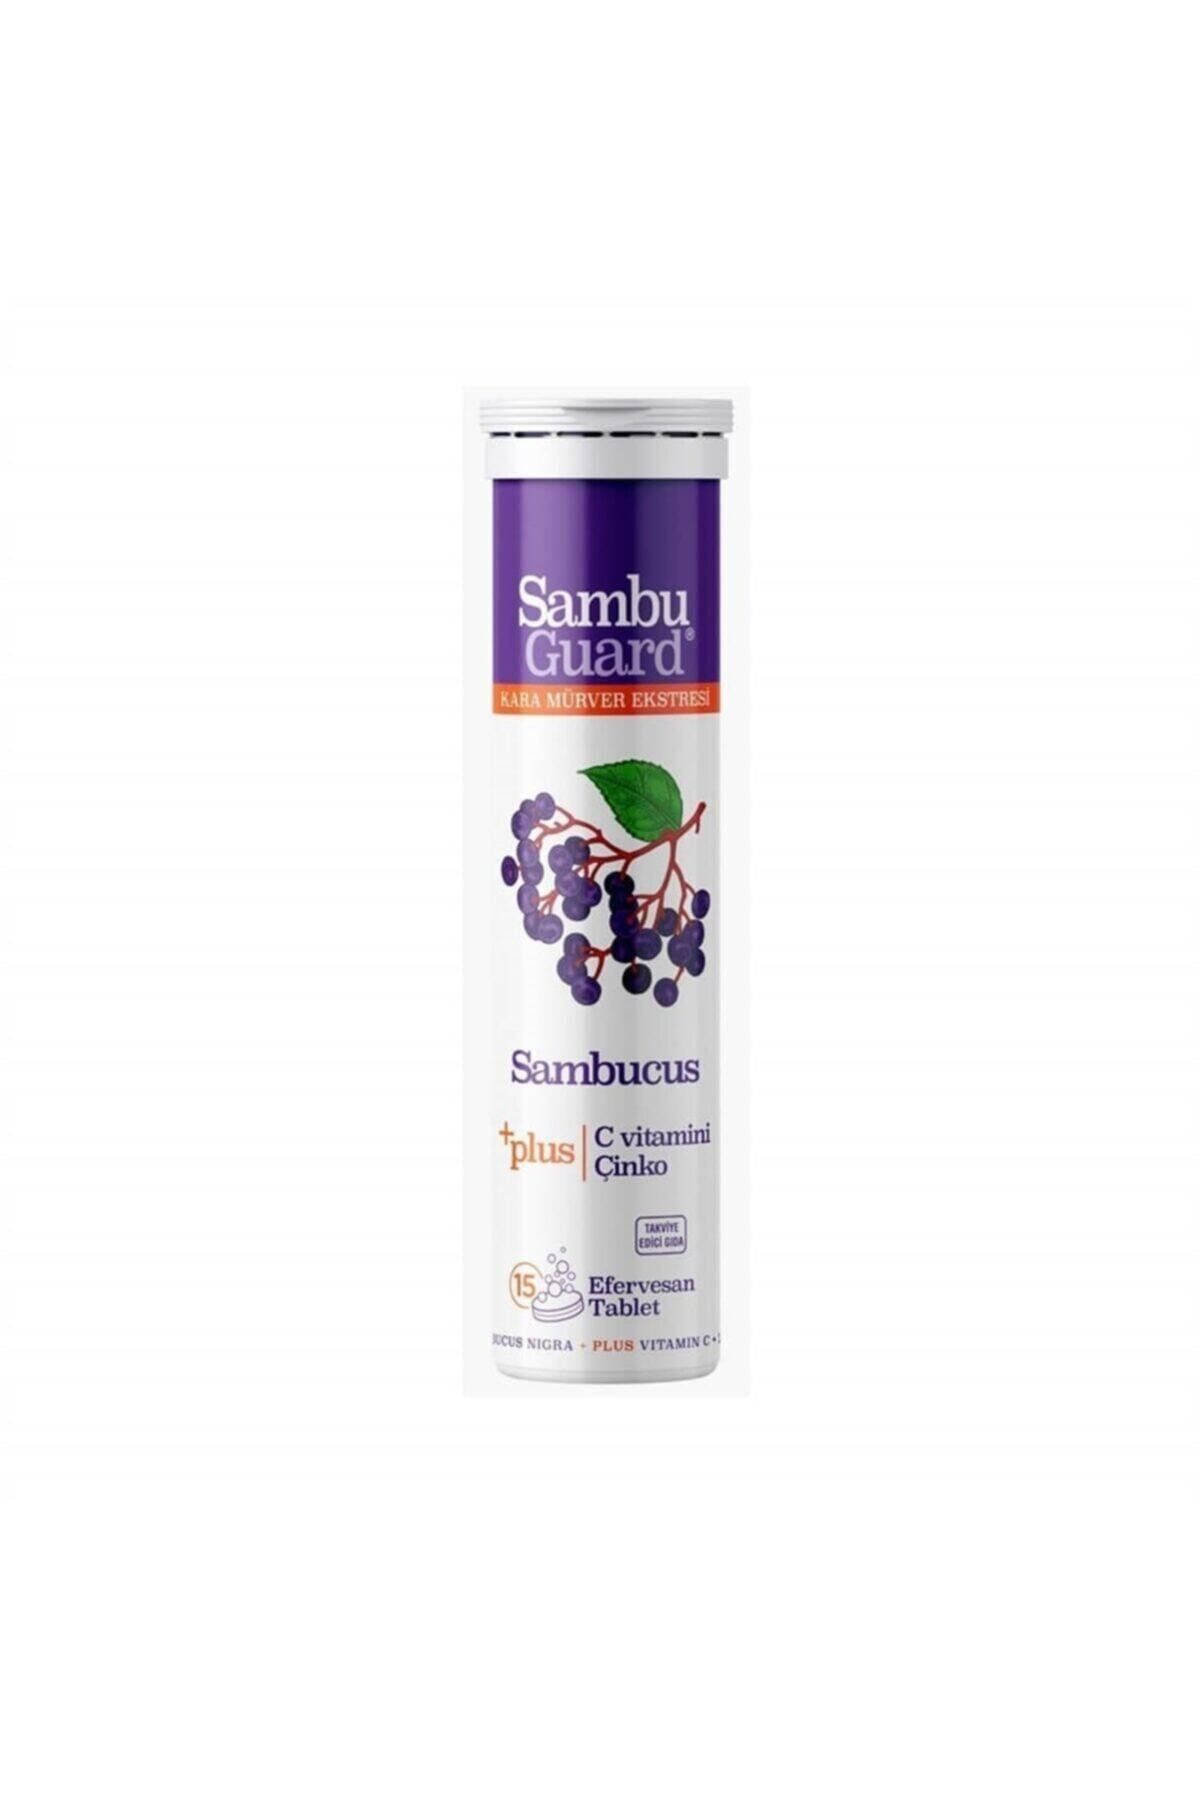 Sambucol Sambuguard Kara Mürver Ekstresi - Sambucus Plus 15 Effervesan Tablet